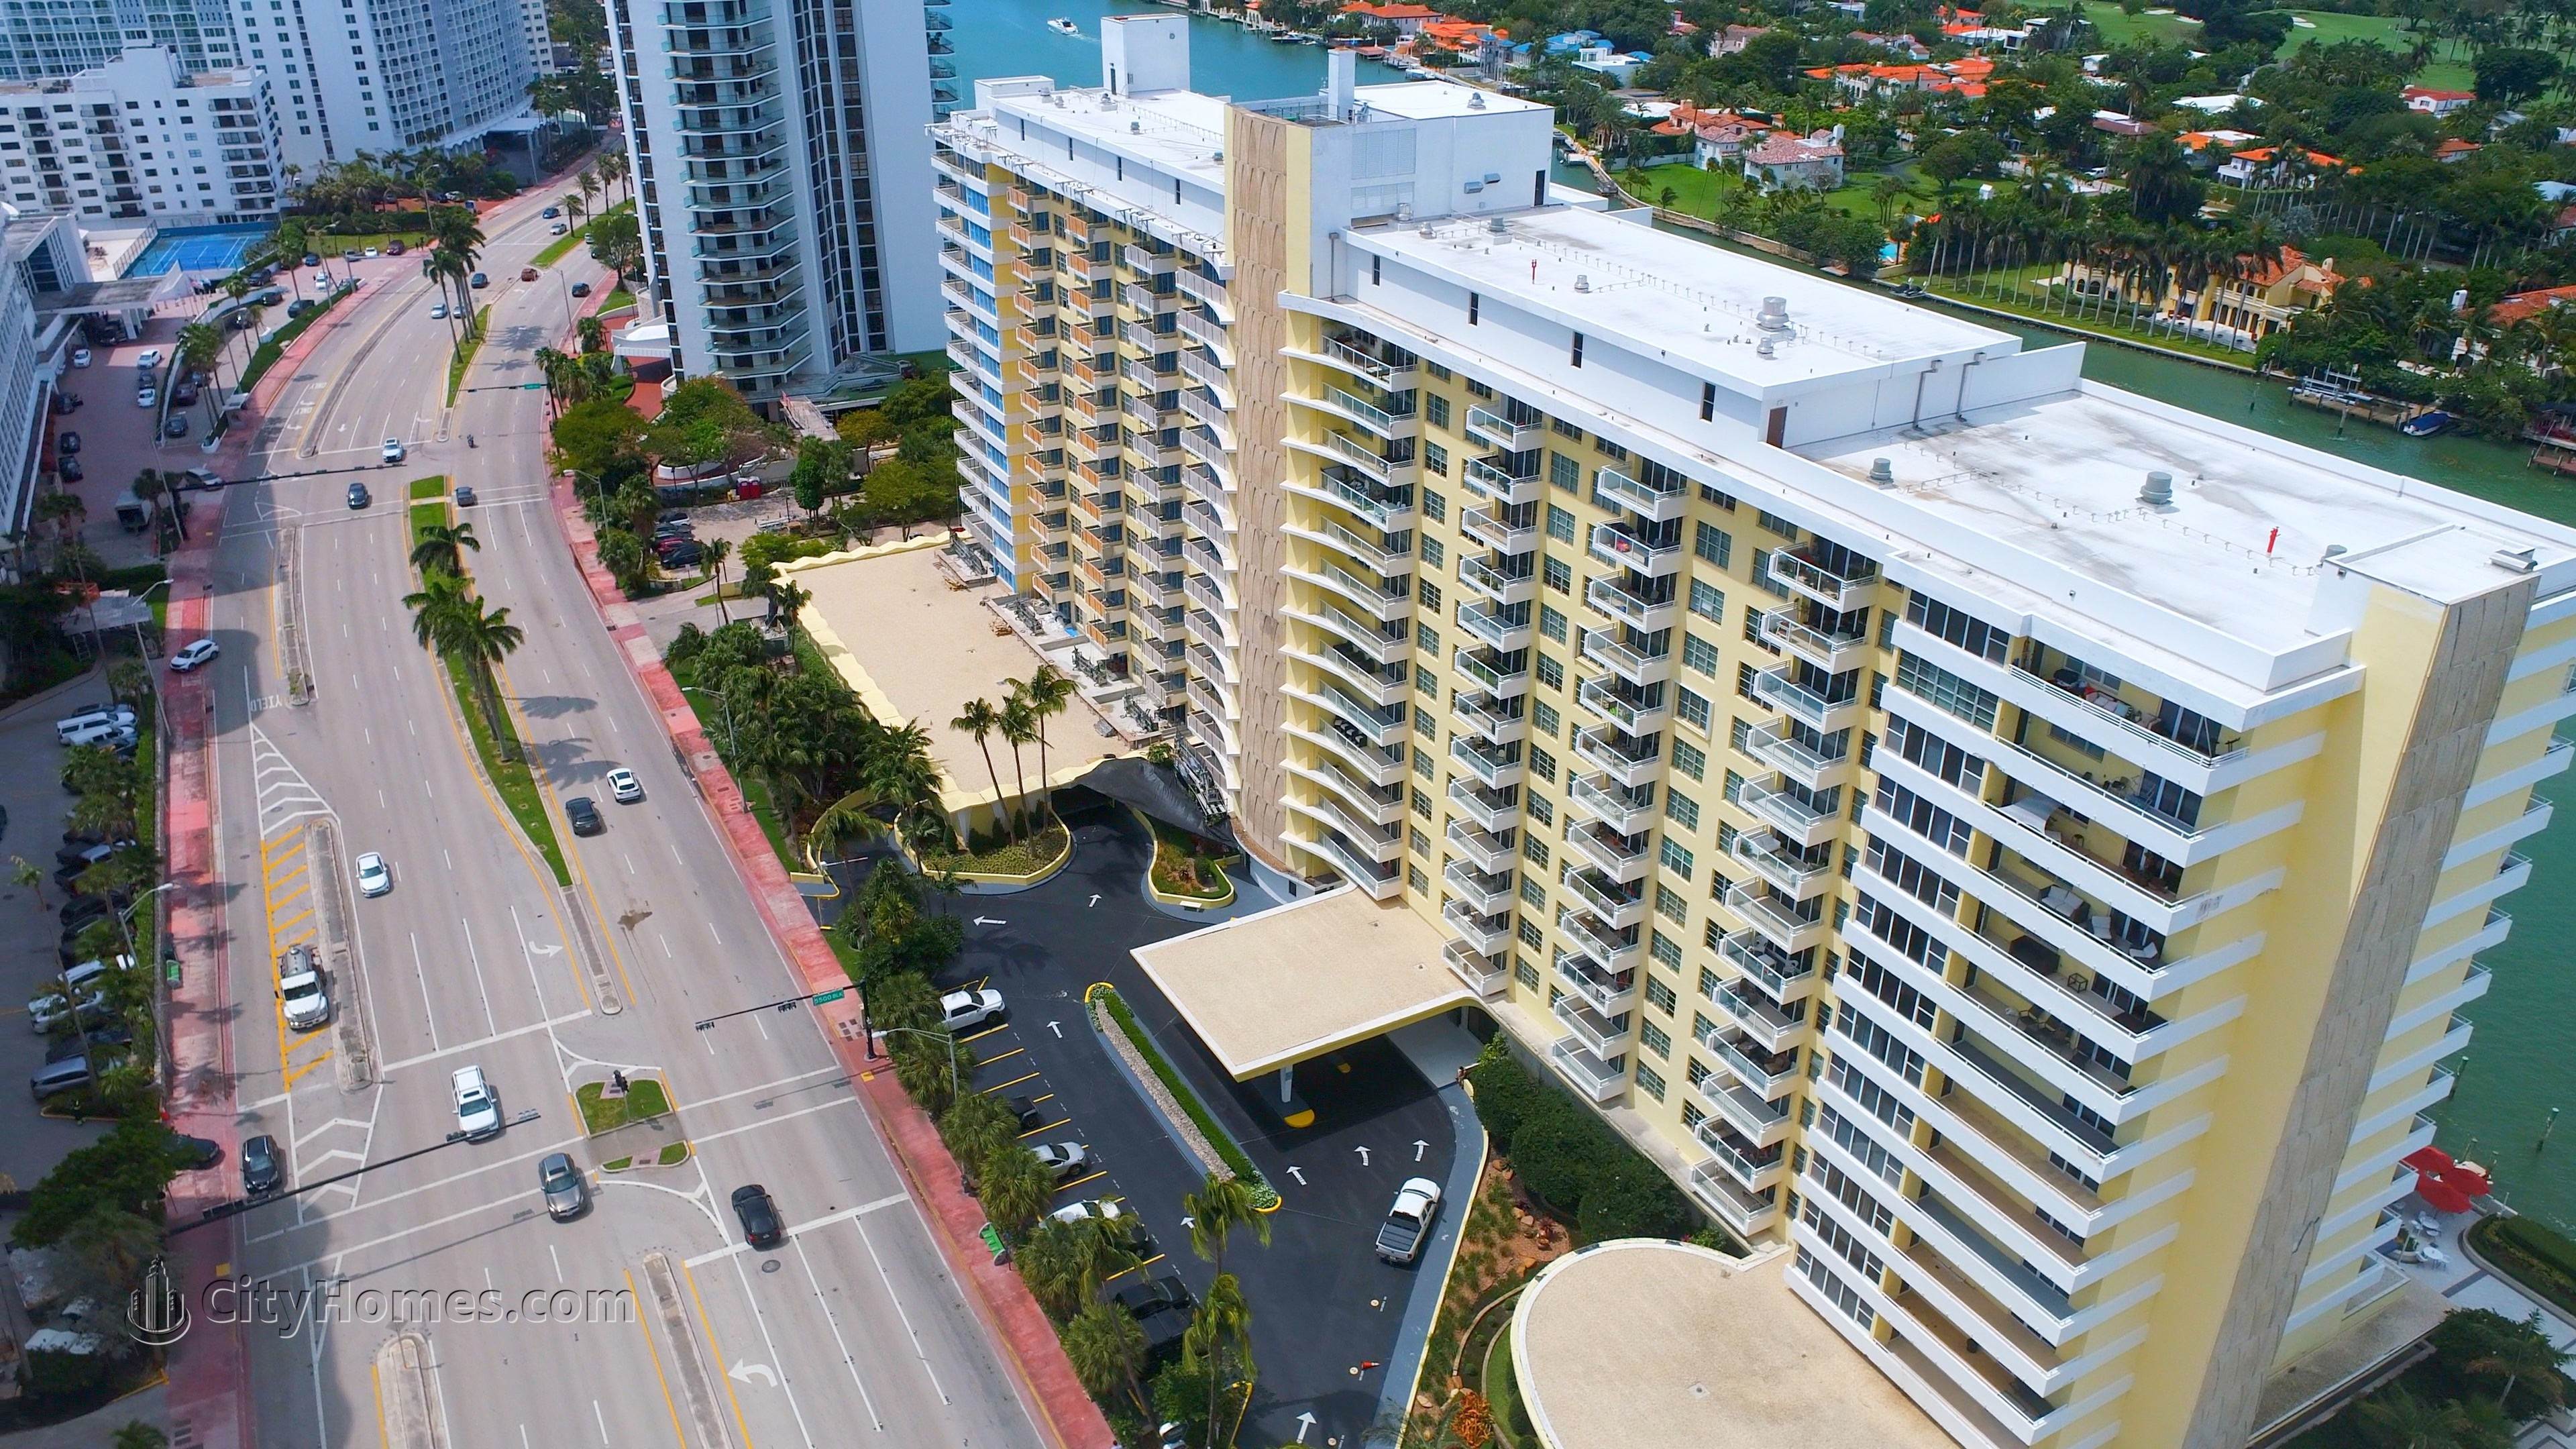 3. 5600 COLLINS  edificio en 5600 Collins Avenue, Miami Beach, FL 33140